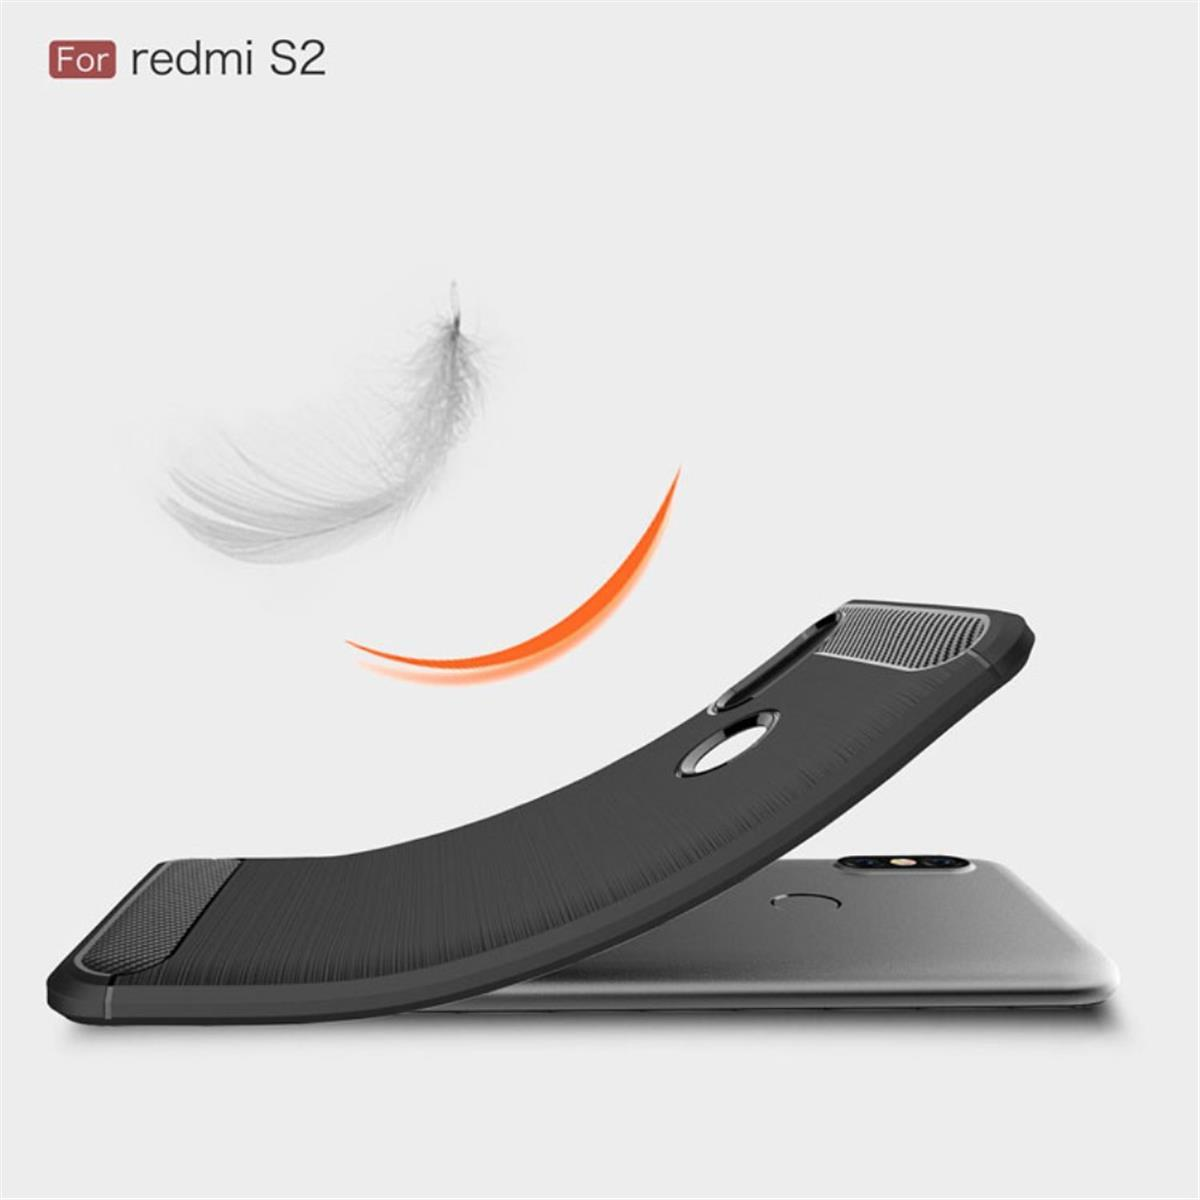 Carbon Handycase Look, Redmi im S2, Xiaomi, schwarz COVERKINGZ Backcover,